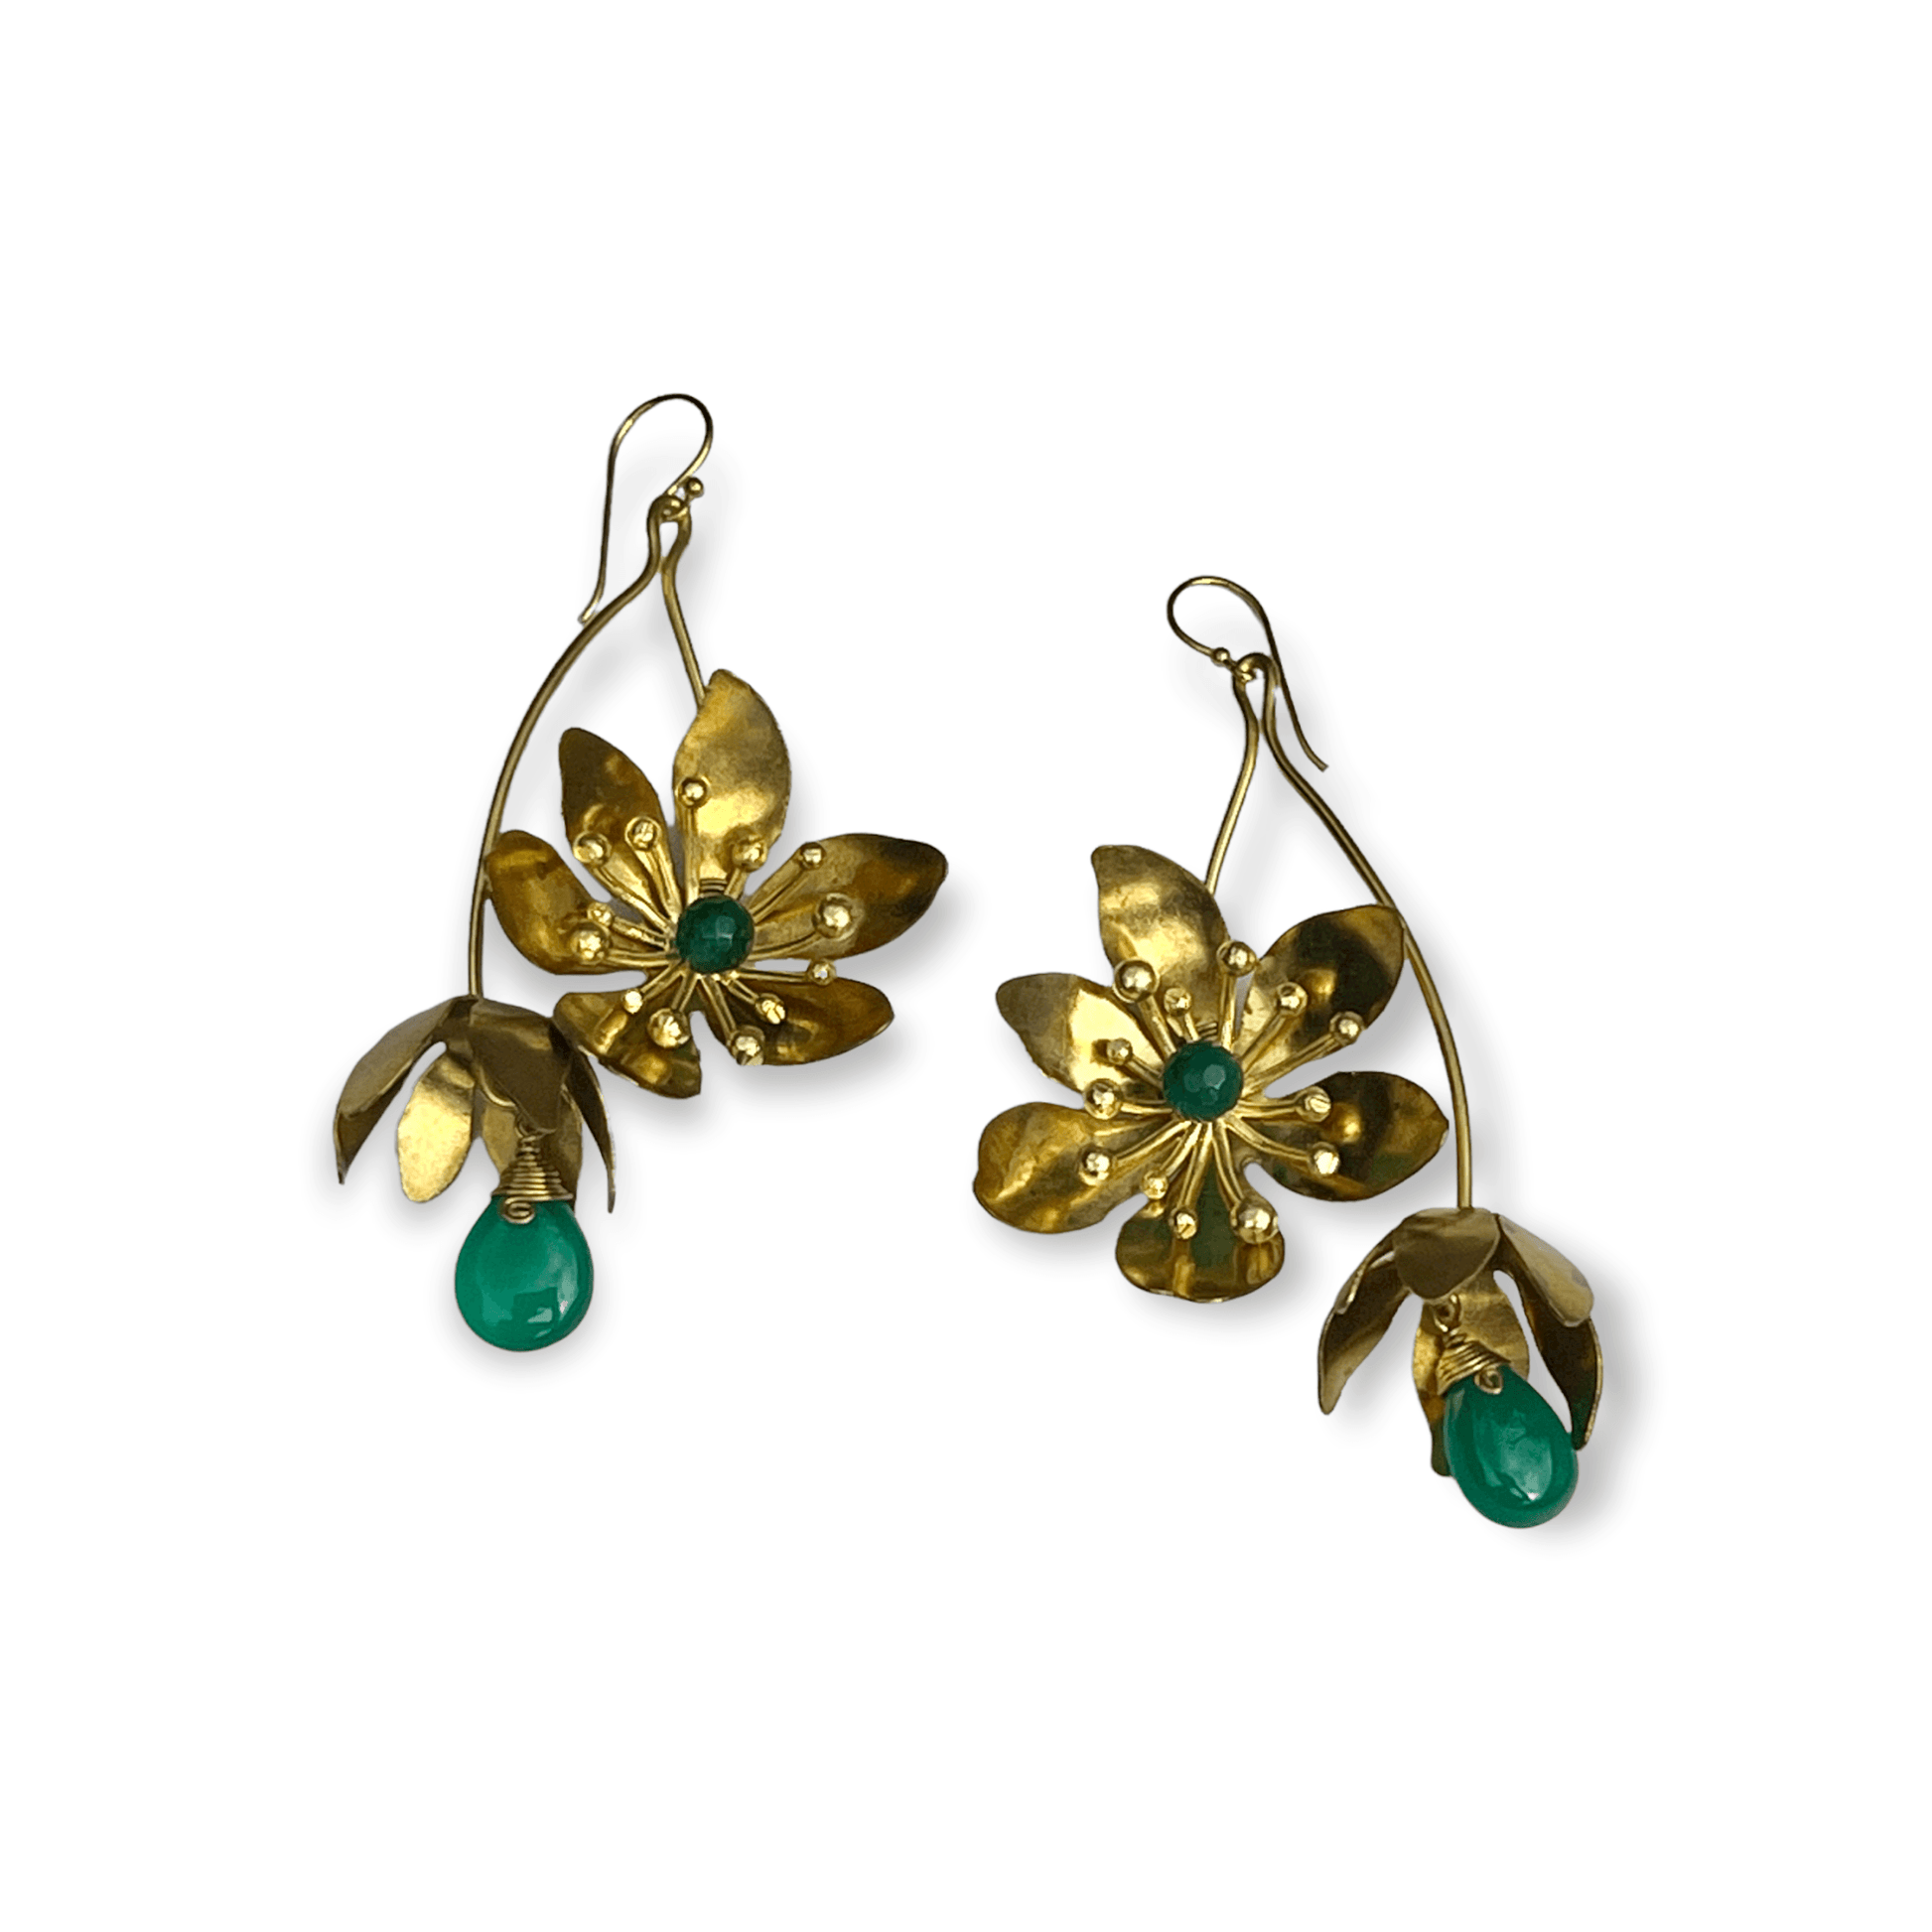 Flower Power - floral drop statement earrings with gemstonesSundara Joon